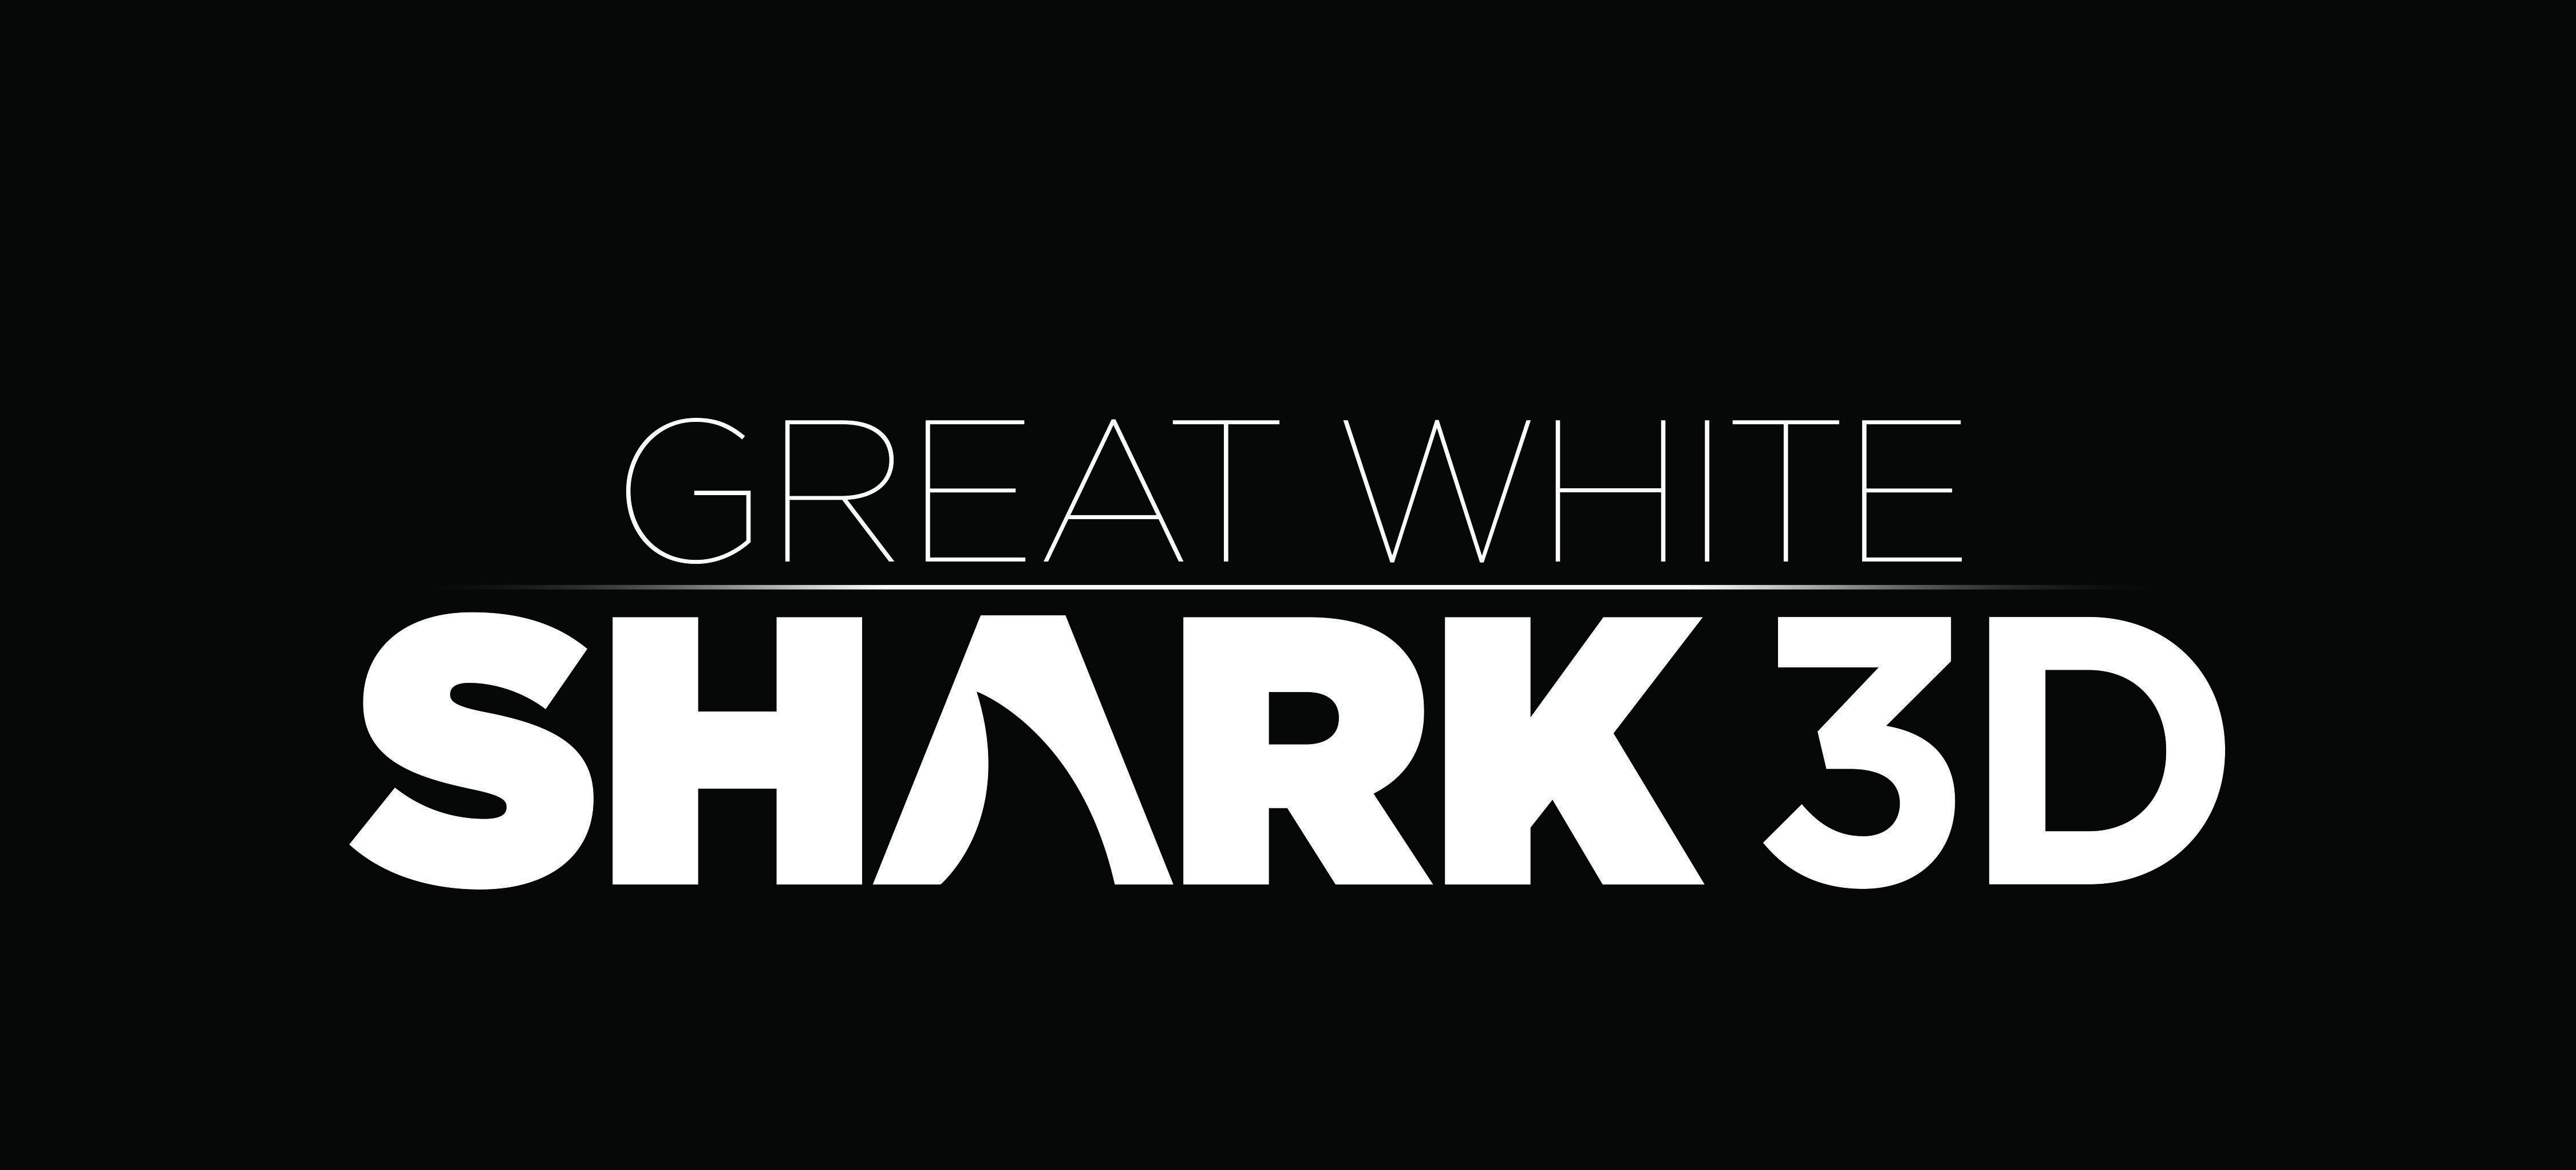 Black and White Shark Logo - Giant Screen Films: Marketing Site